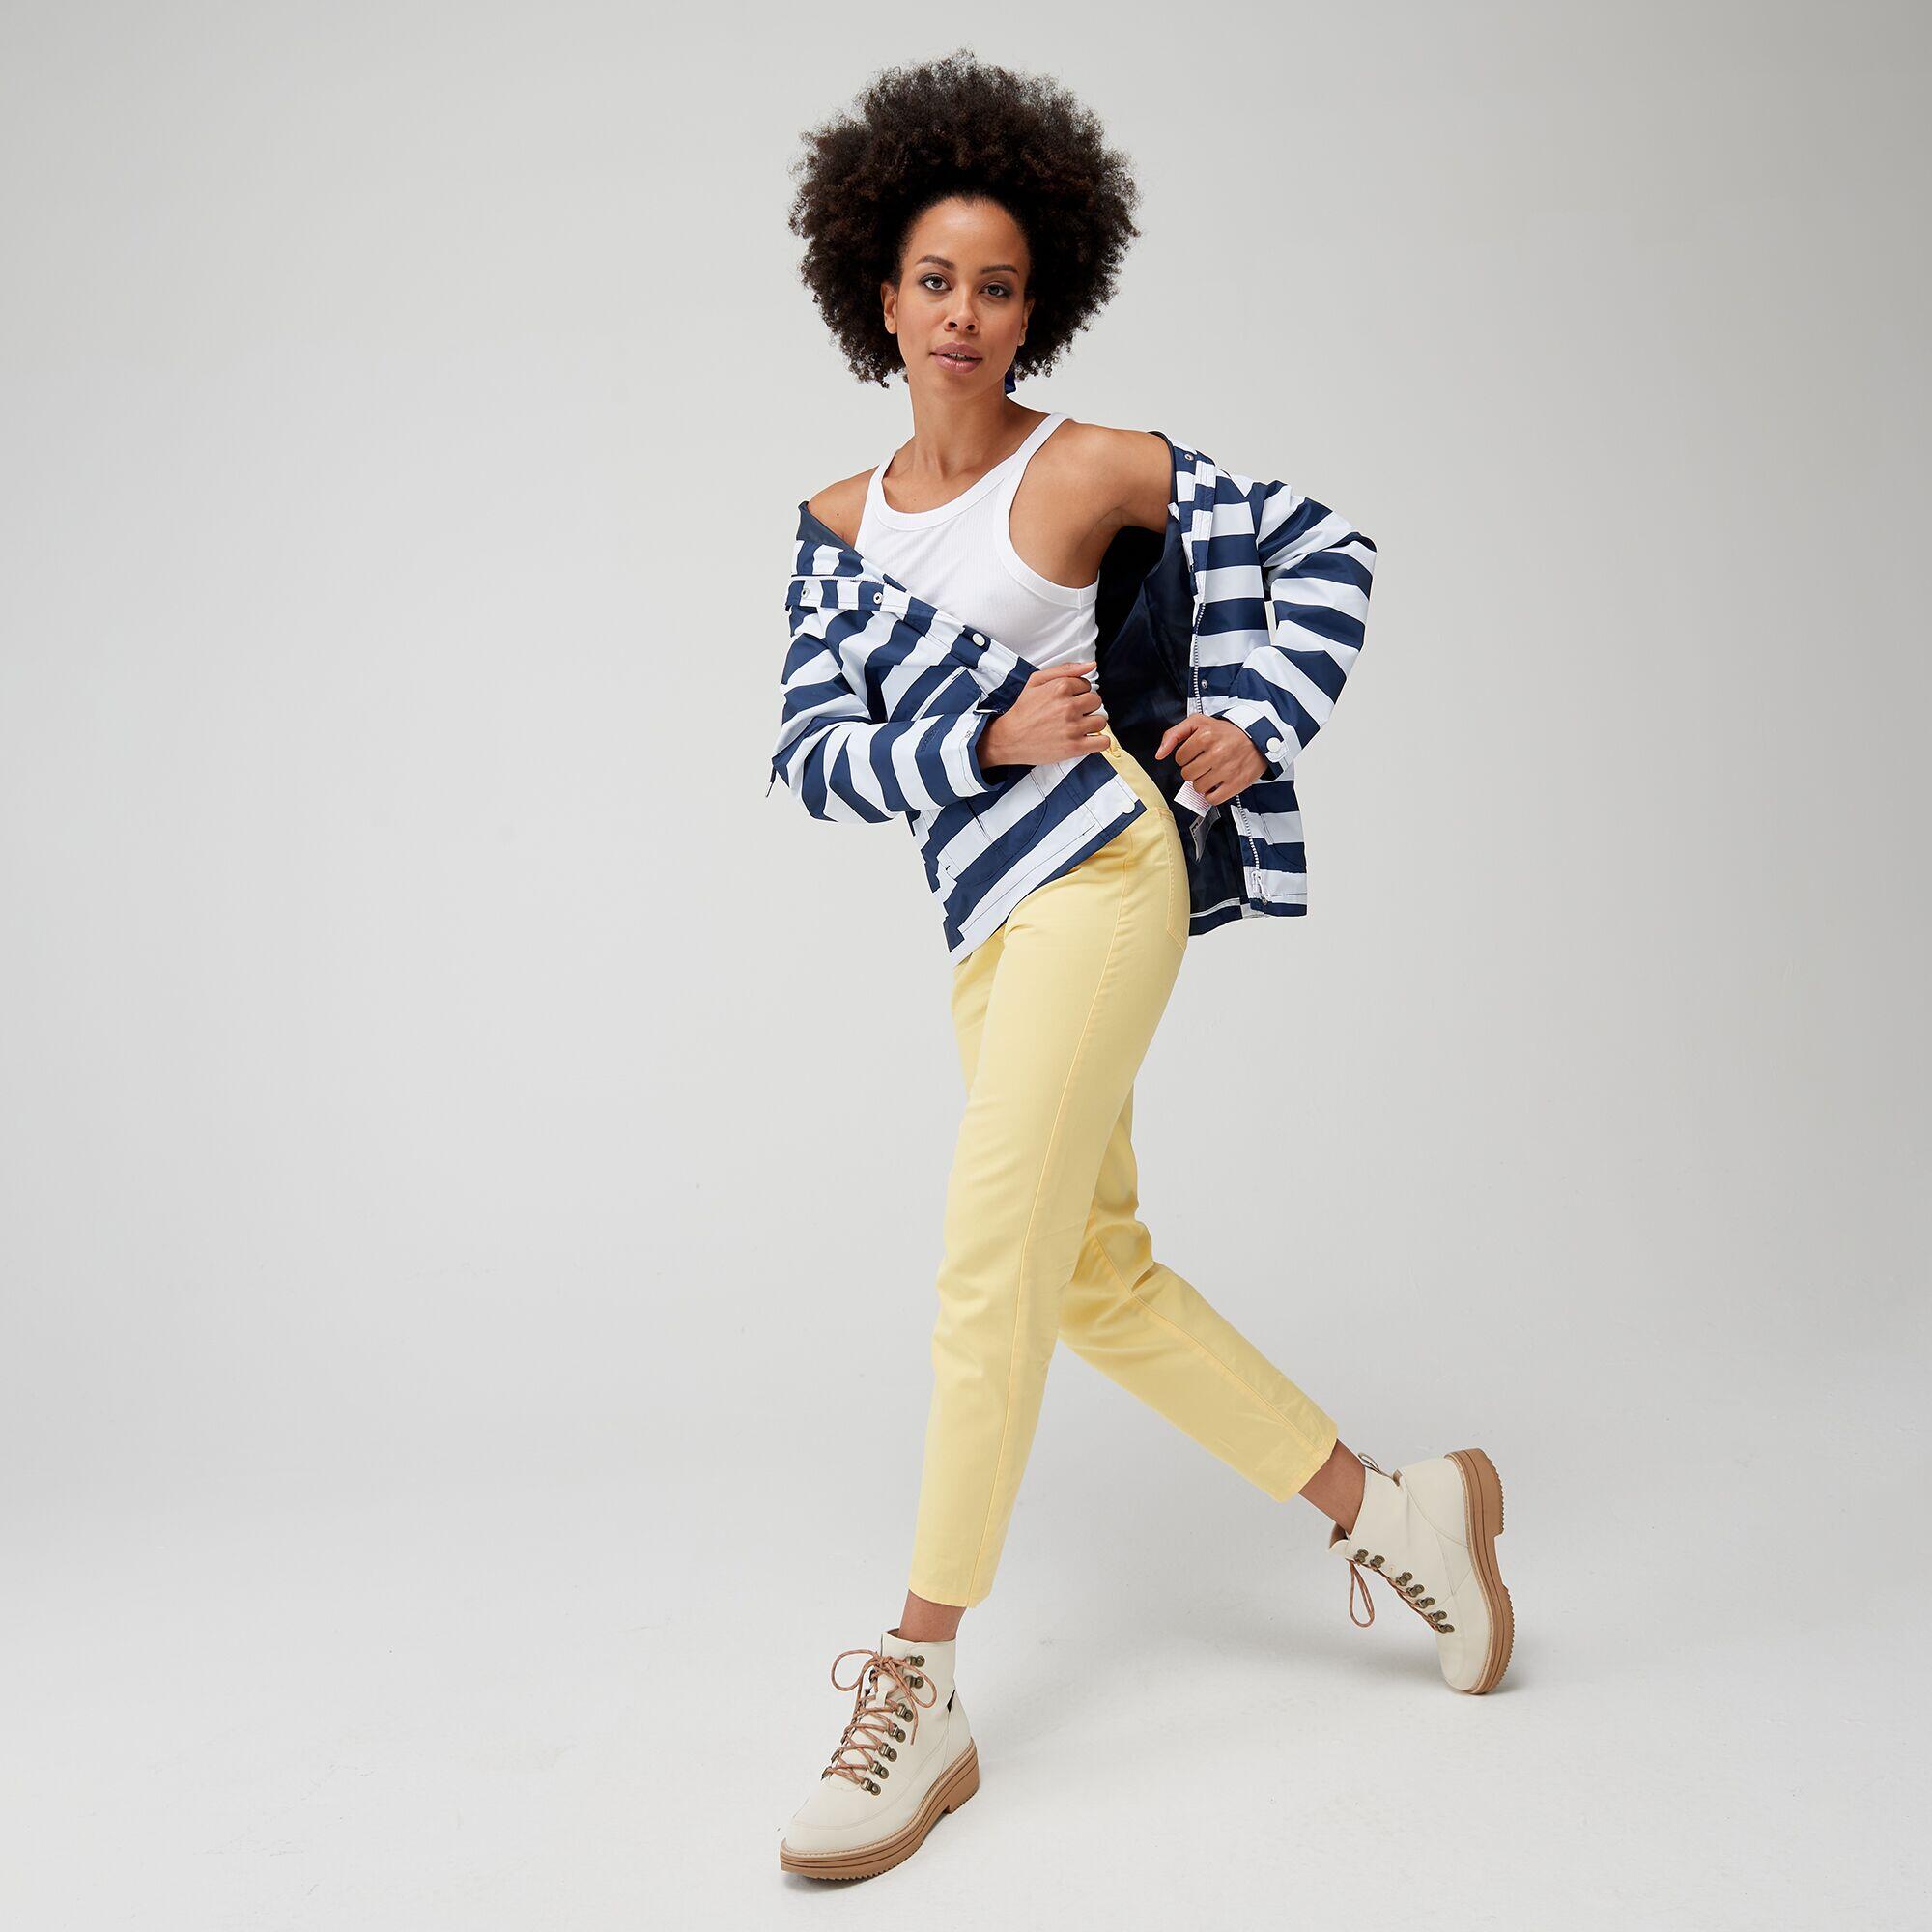 Bayarma Women's Walking Cotton Jacket - Navy Stripe 4/6